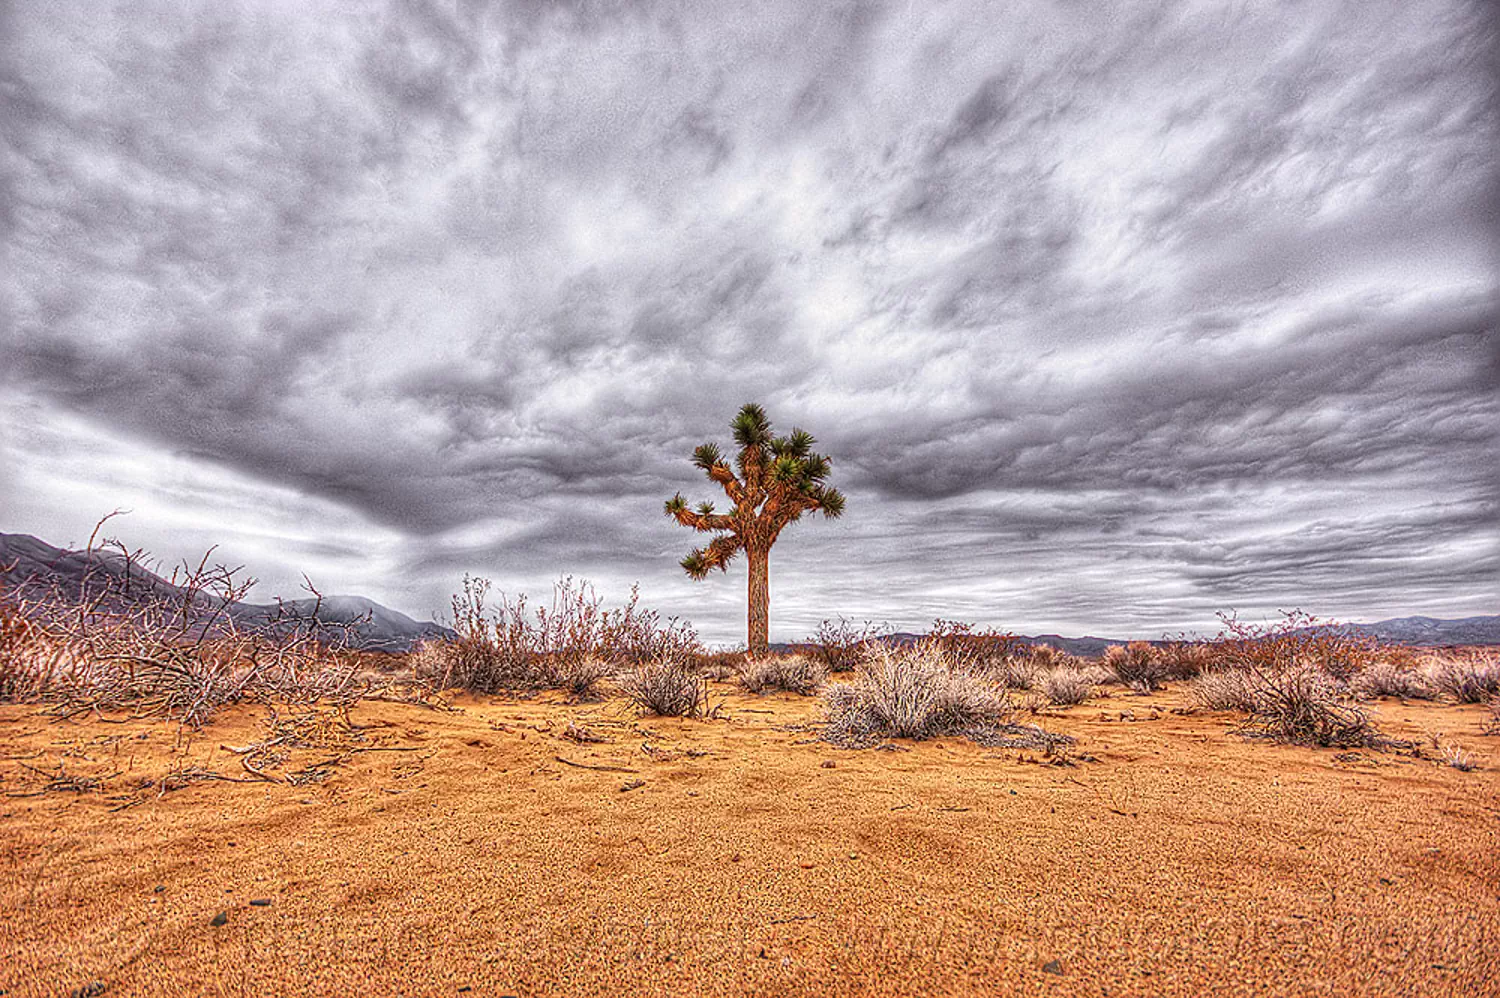 joshua tree - california desert, clouds, cloudy sky, death valley, joshua tree, sand, yucca brevifolia